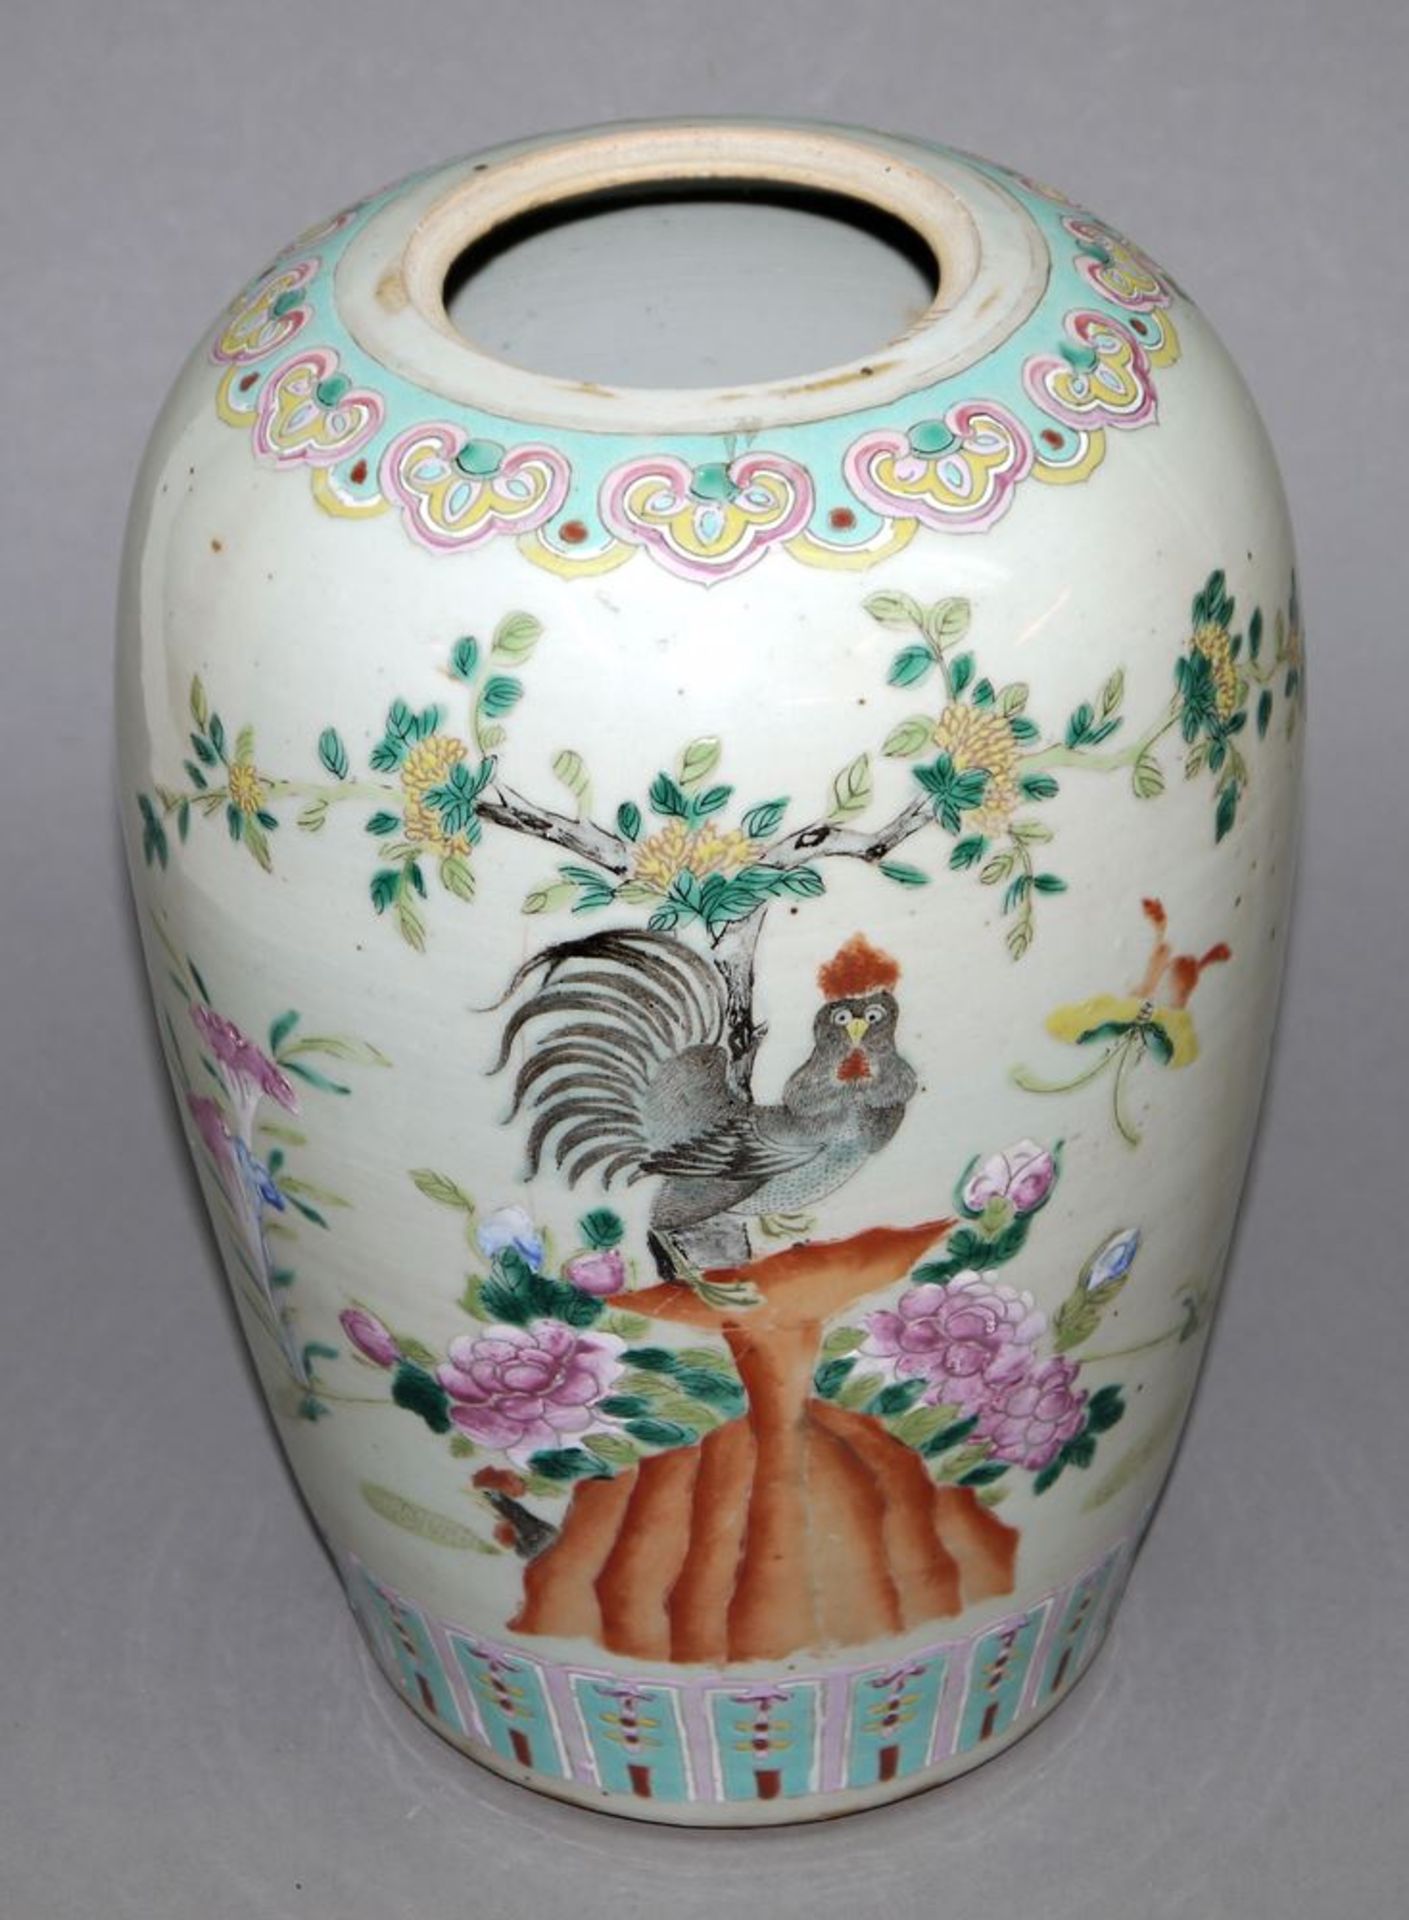 Porzellan-Vorratstopf mit Hühnervögeln, späte Qing-Zeit, China 19. Jh. - Image 2 of 5